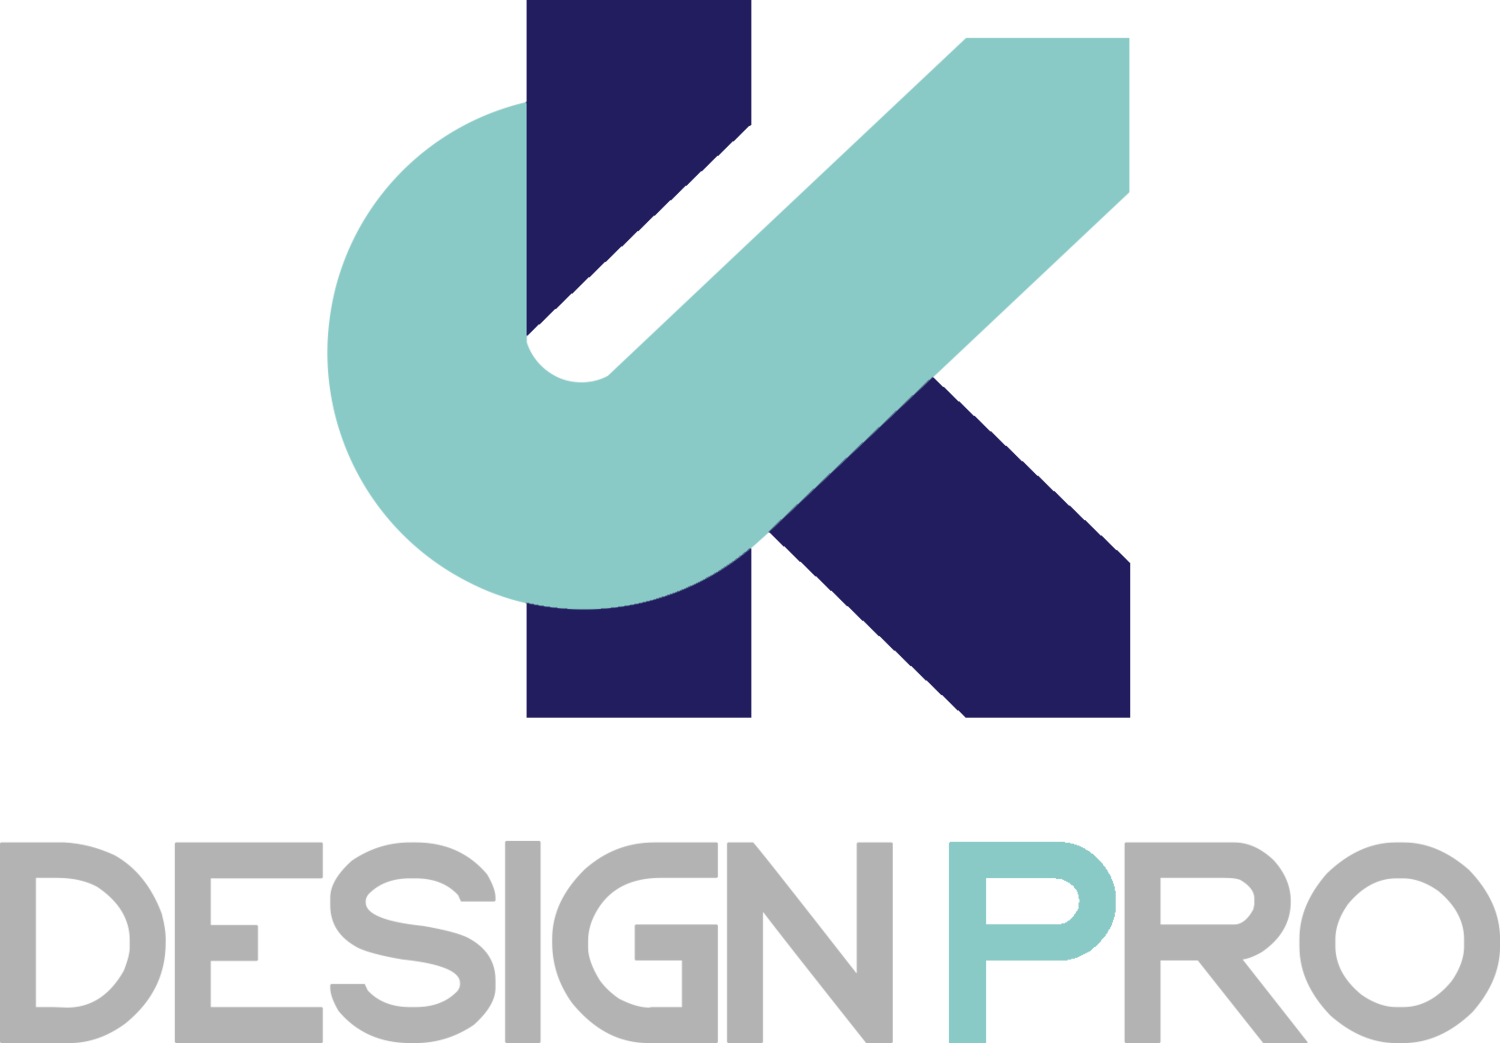 Pri. Pro Design. Логотип Design Pro. Professional logo Design. Pro интерьер логотип.